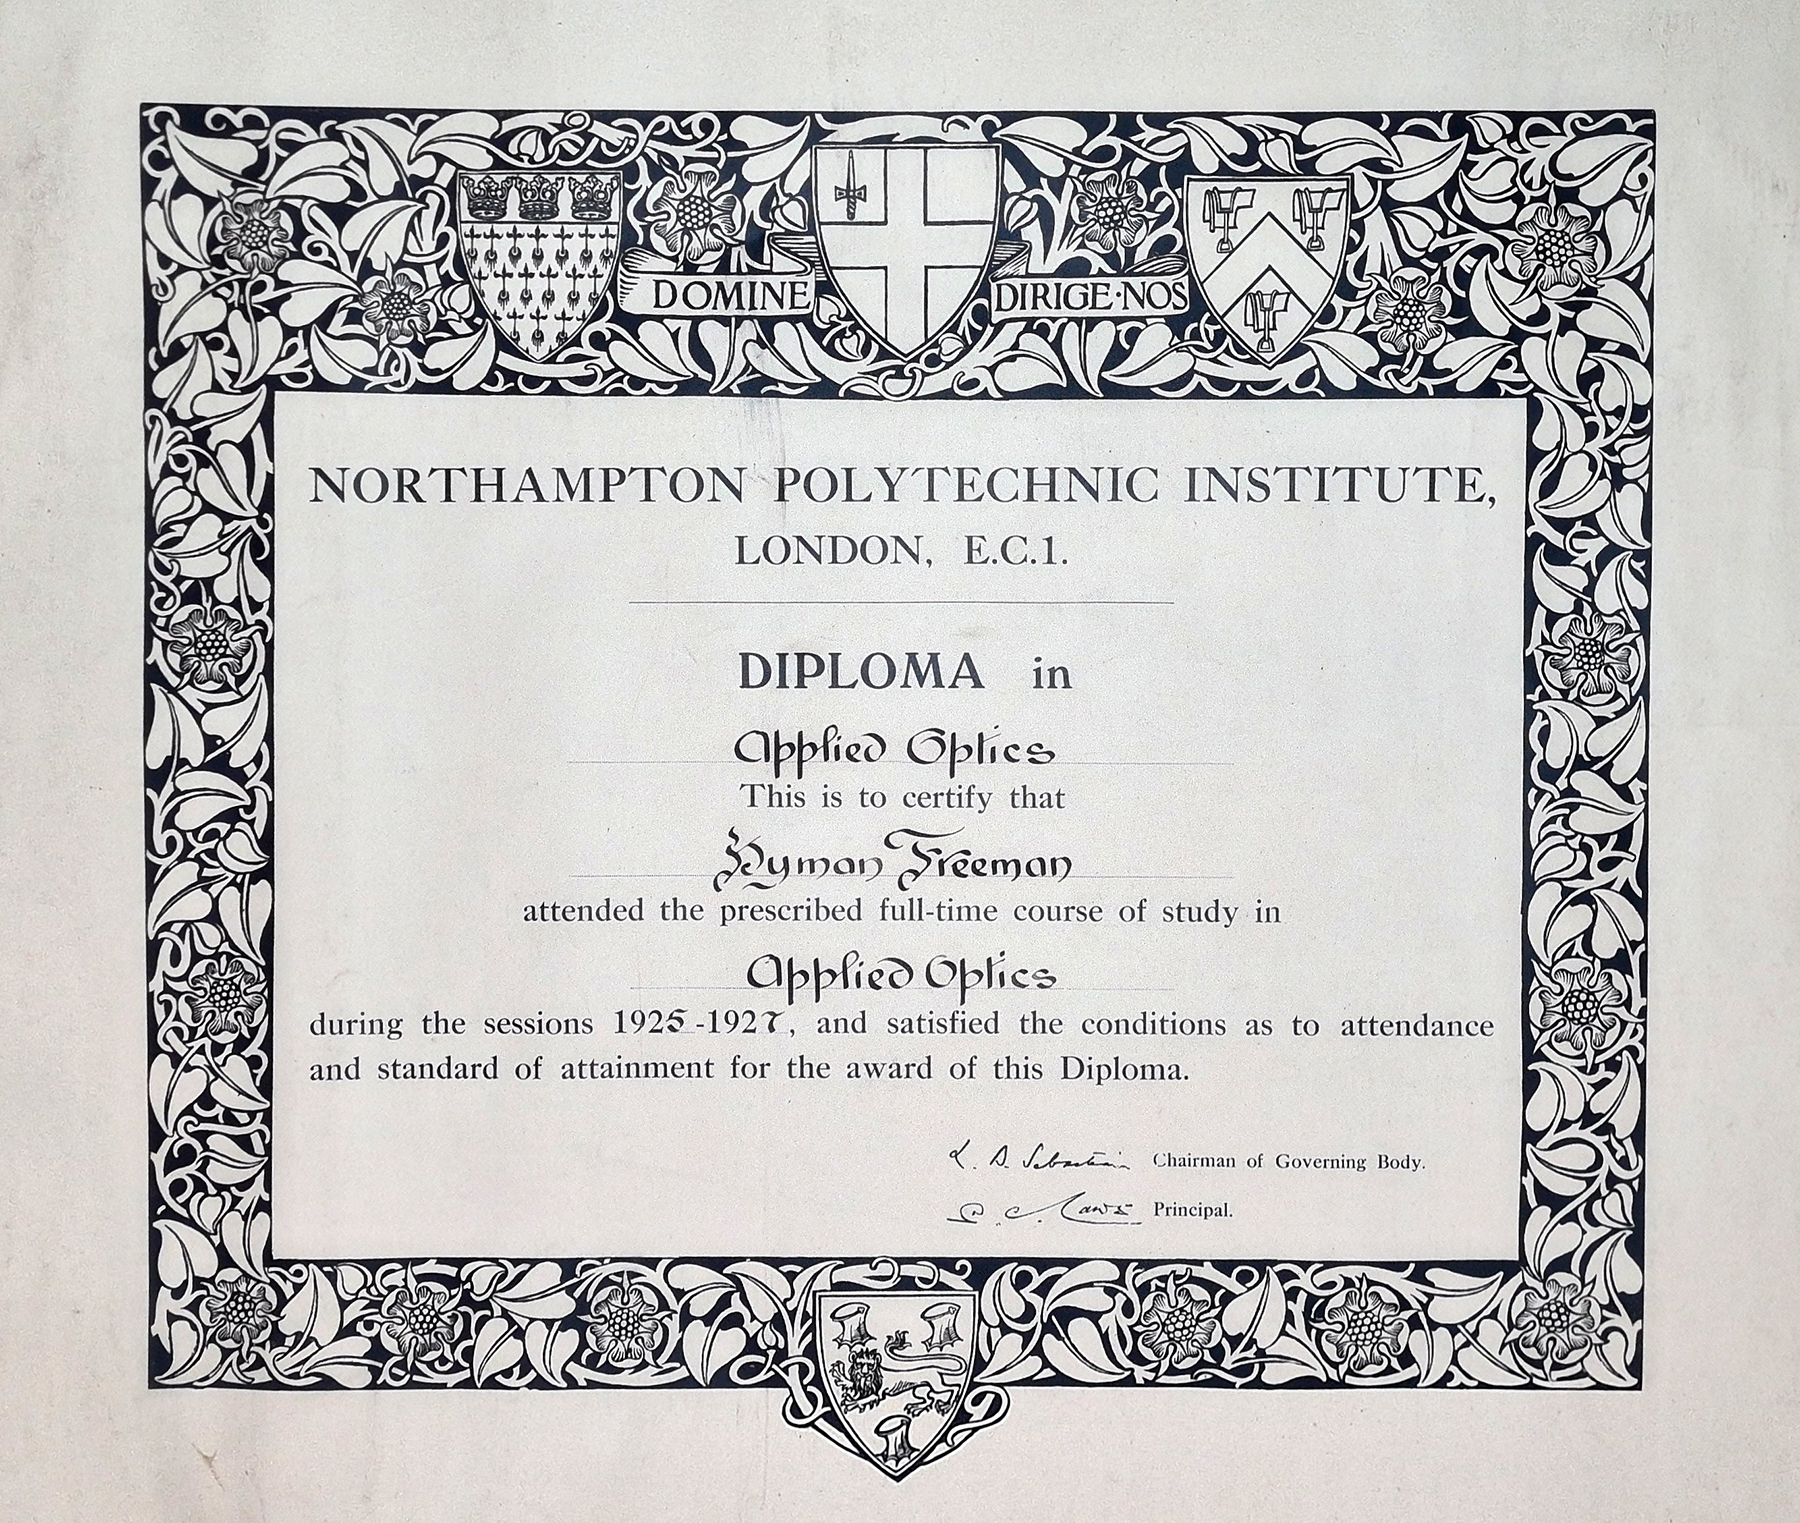 Diploma Certificate (Hyman Freeman) 1925-27